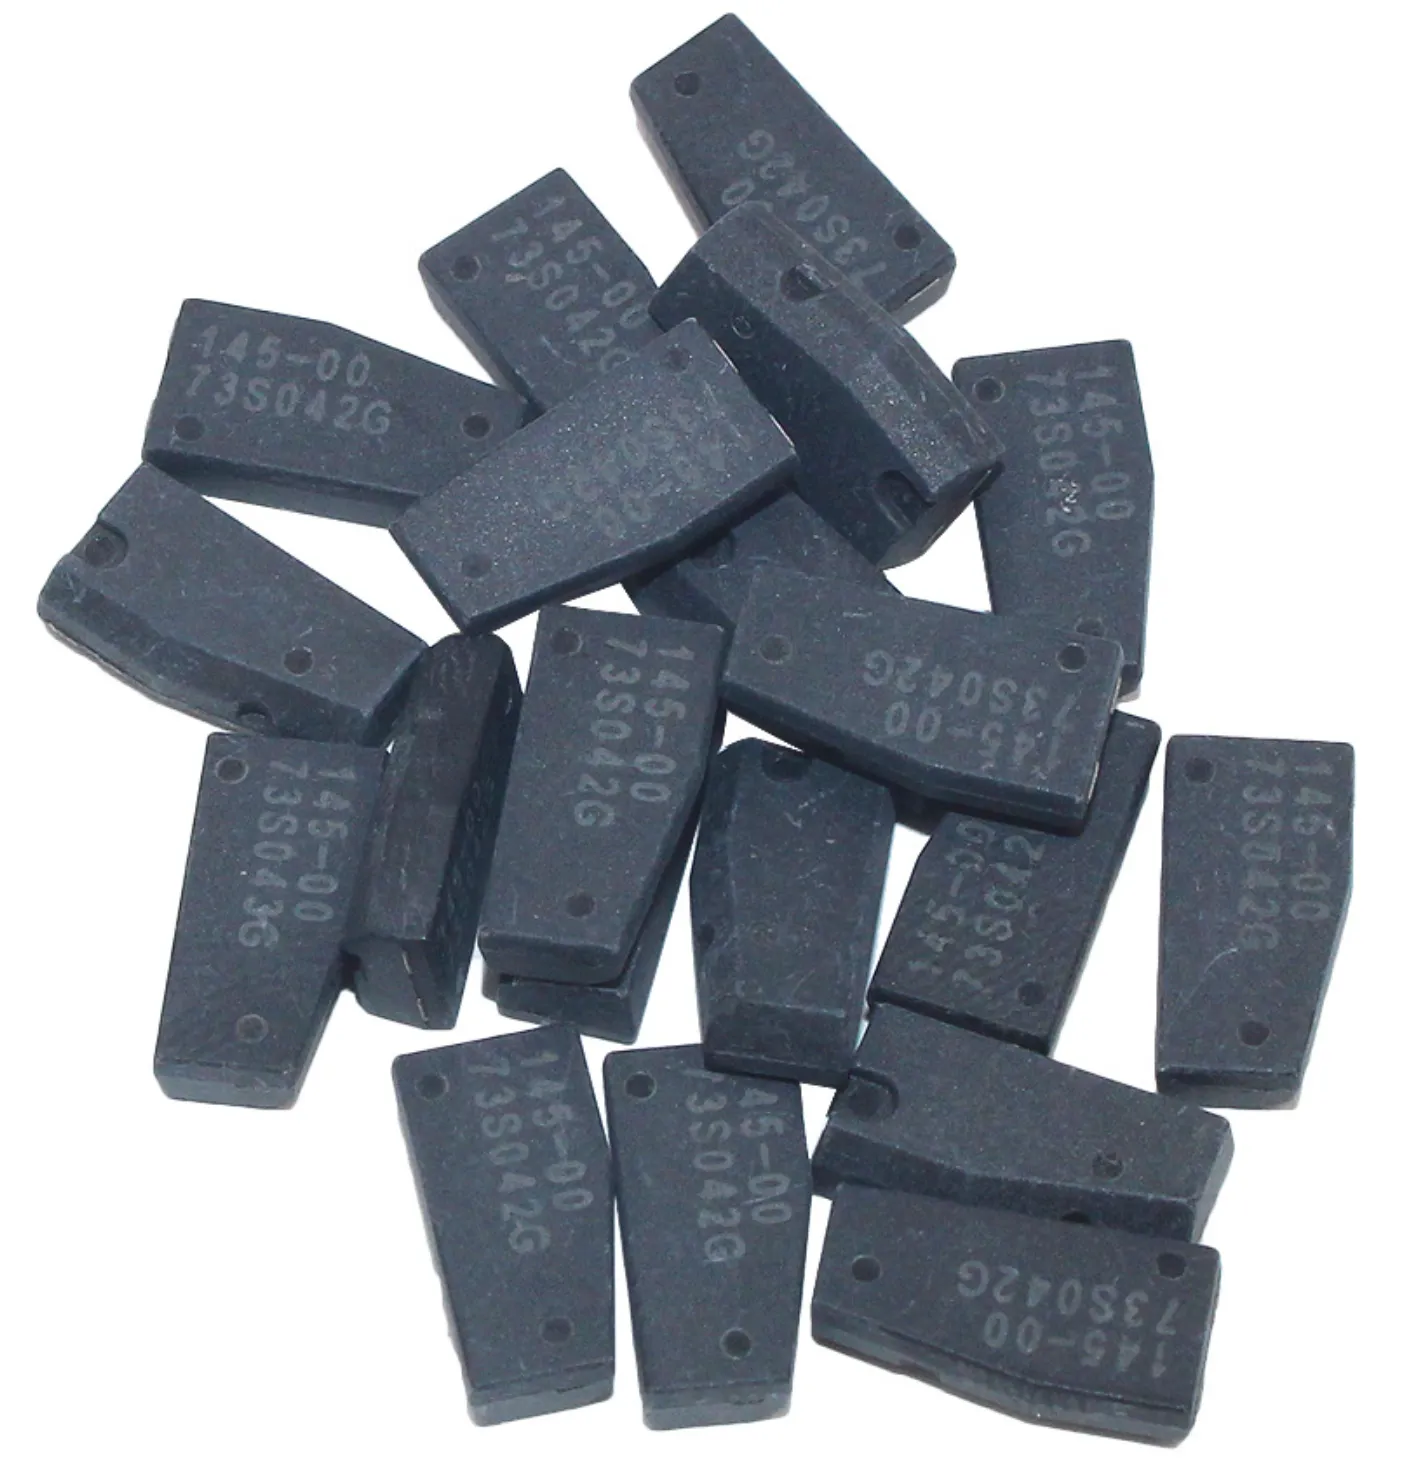 10 unids/lote G chip ID82 (80BIT) Chip de carbono para SUBARU XV 2012 2013 2014